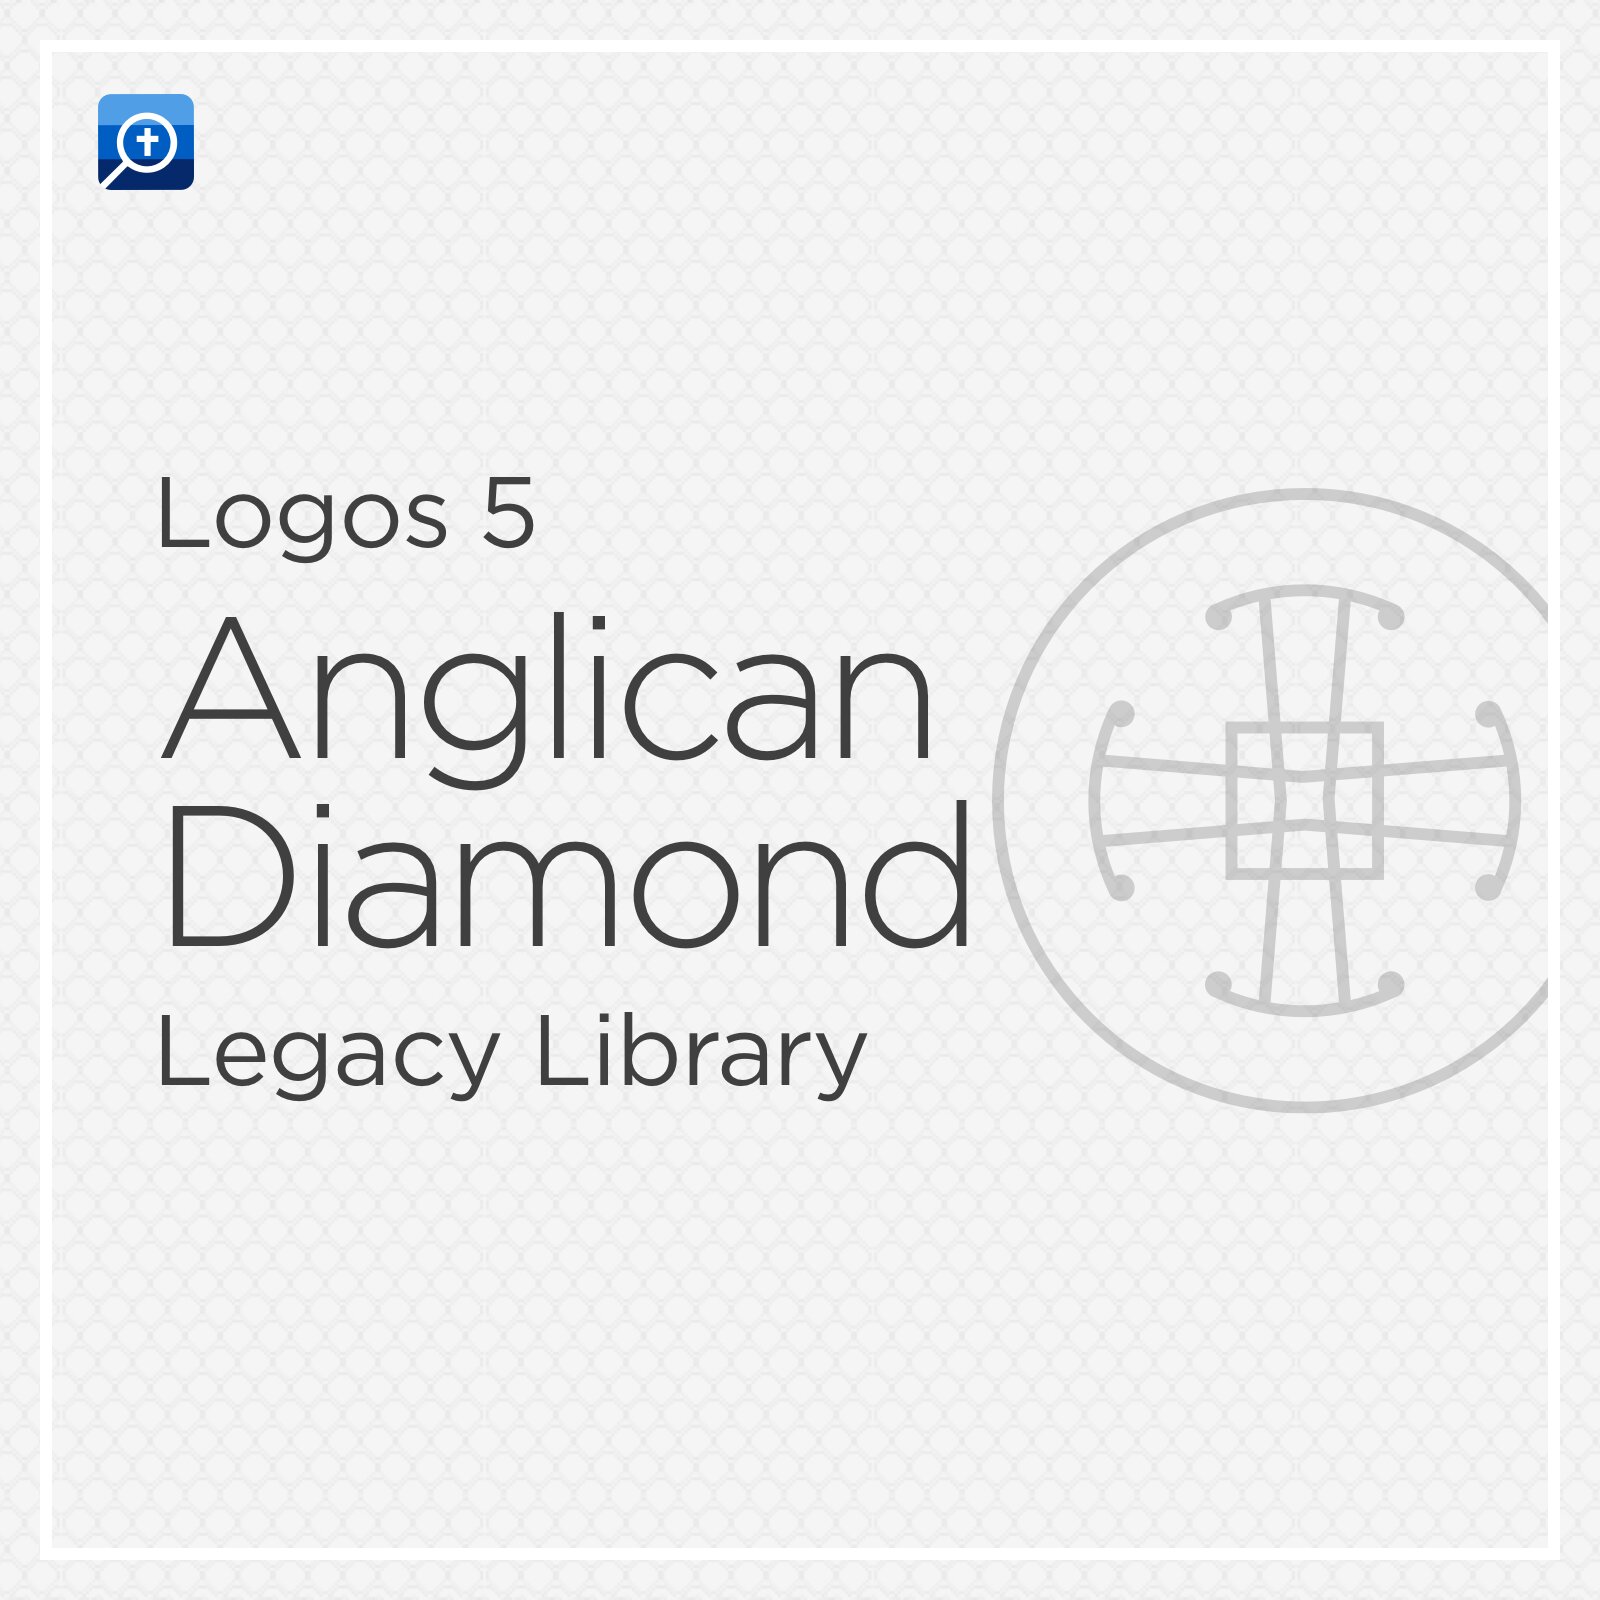 Logos 5 Anglican Diamond Legacy Library